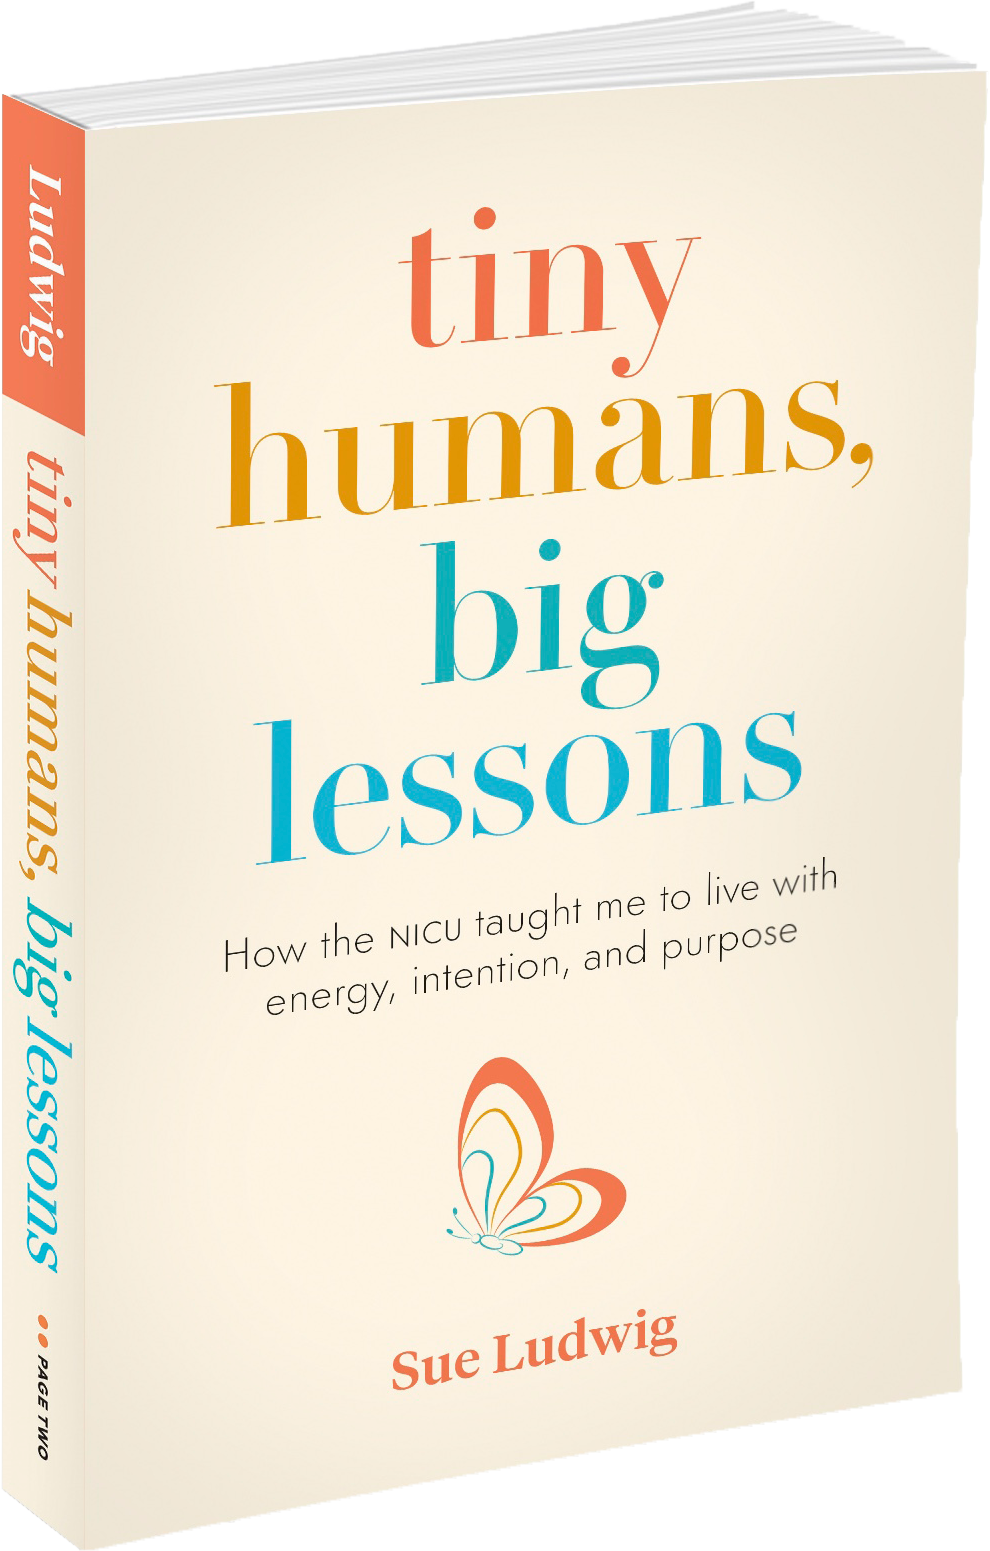 tiny humans, big lessons 3-D book cover